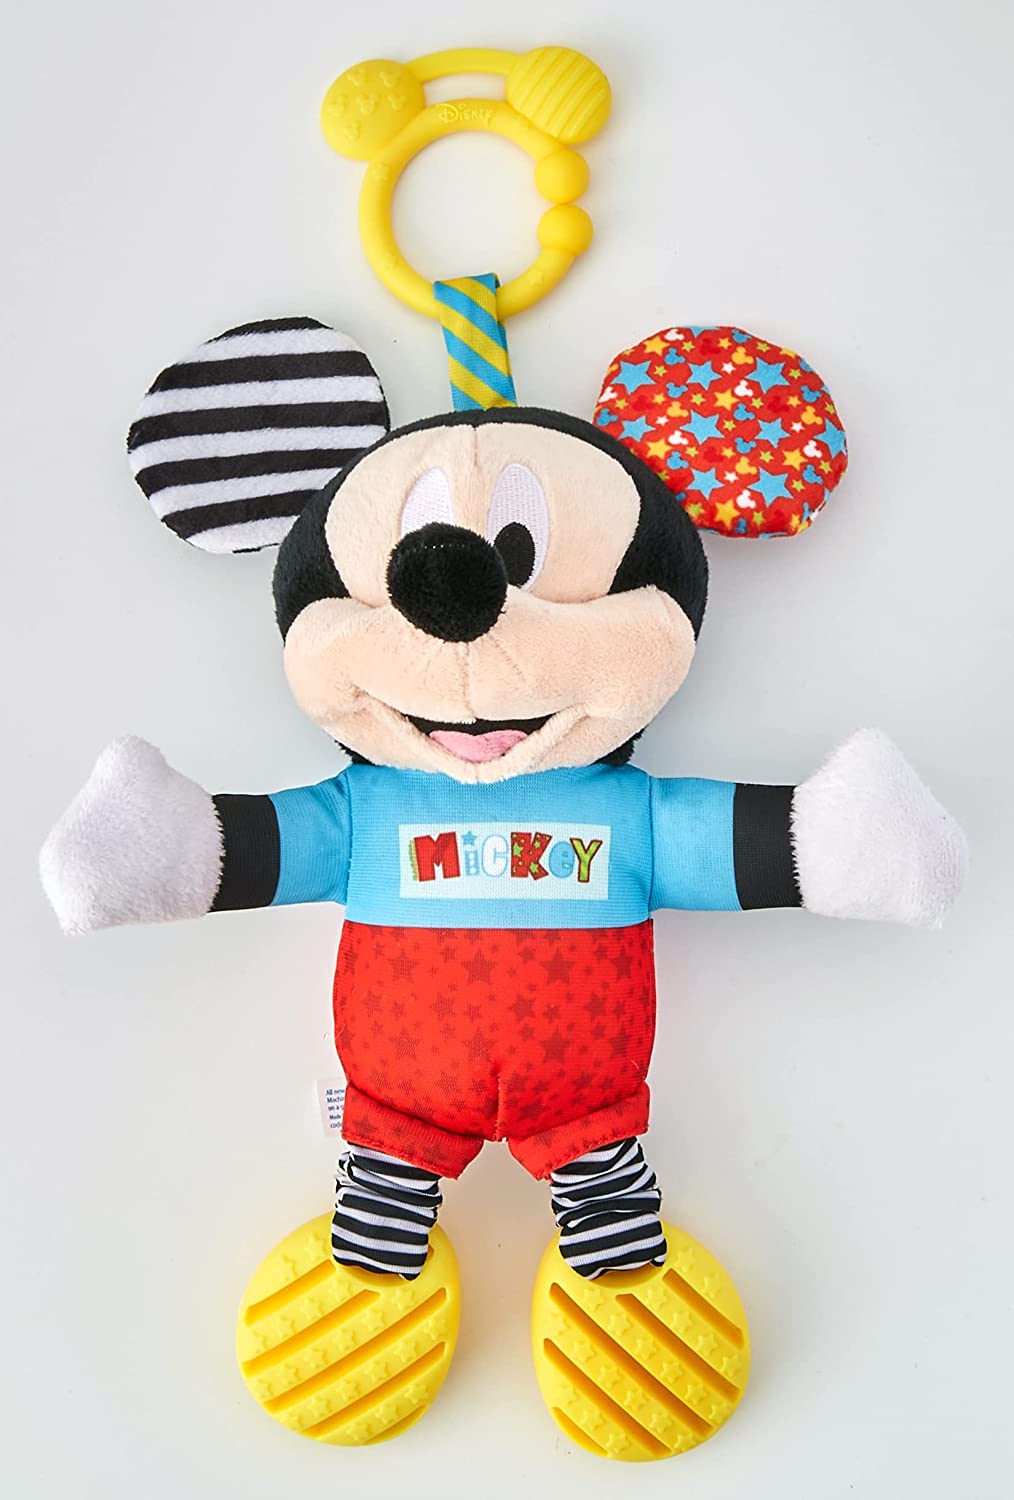 Clementoni 17165 Disney Baby-Mickey First Activities Plush